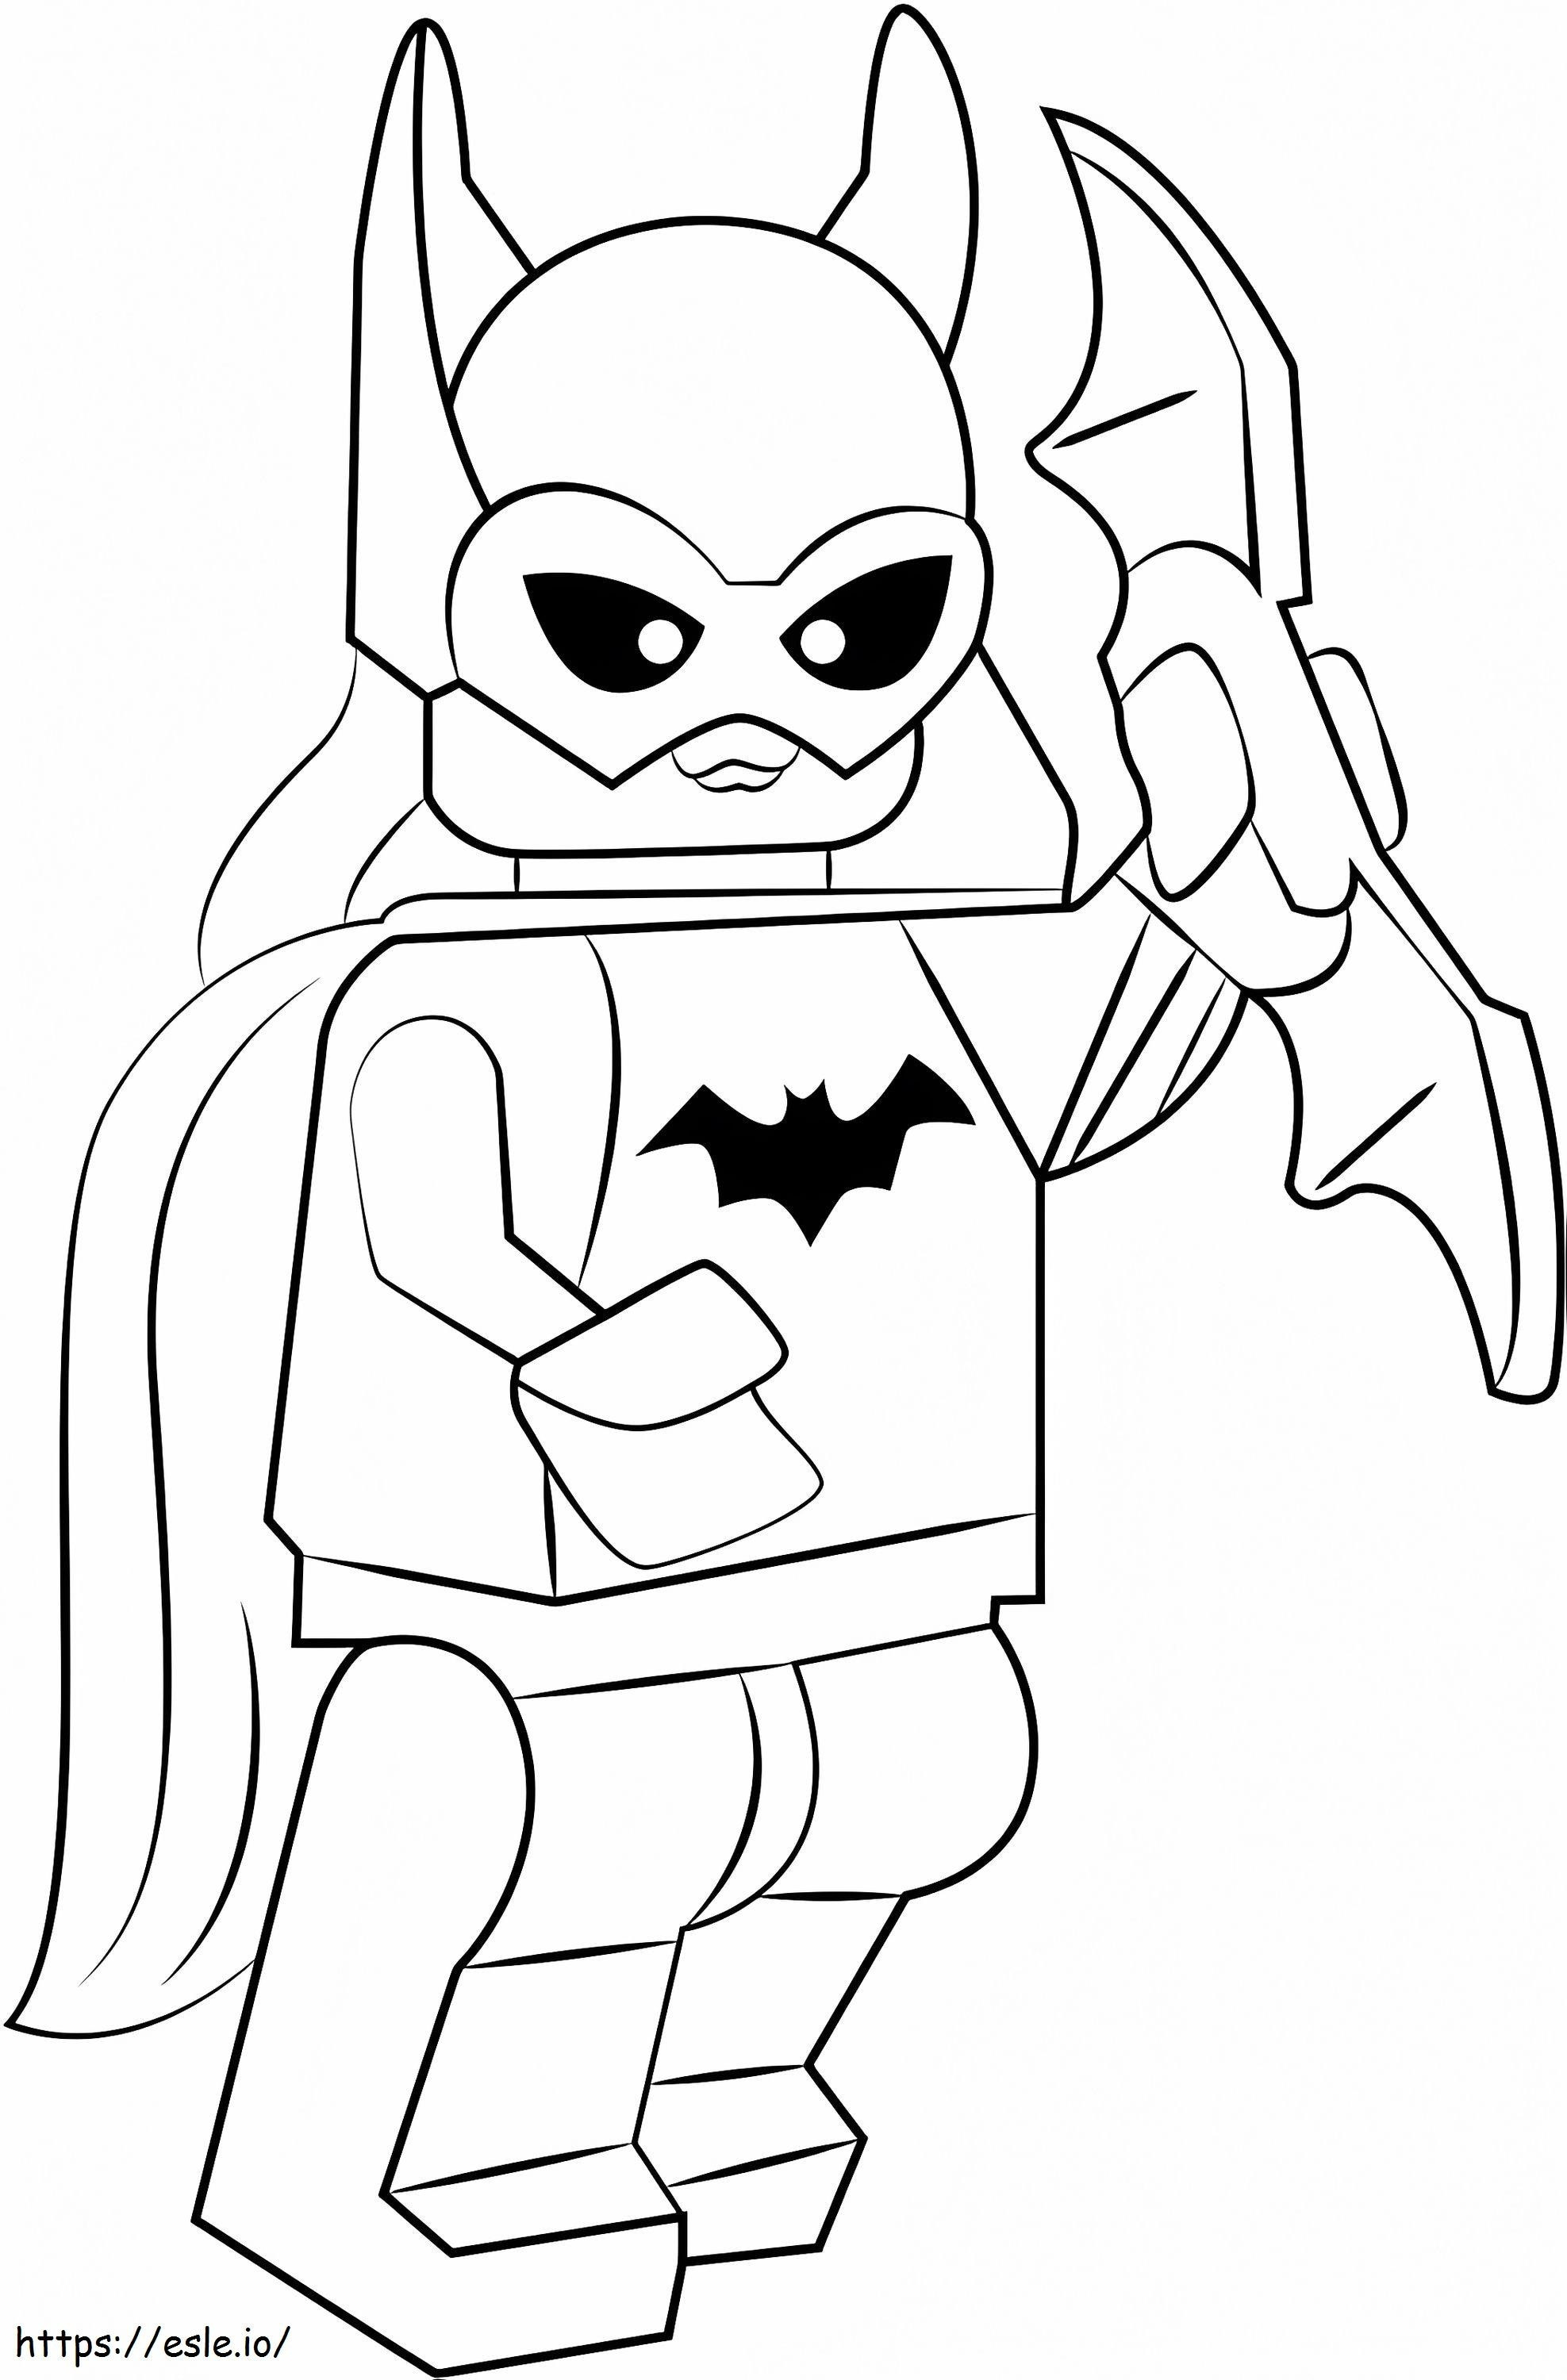 Lego Batgirl sorrindo para colorir